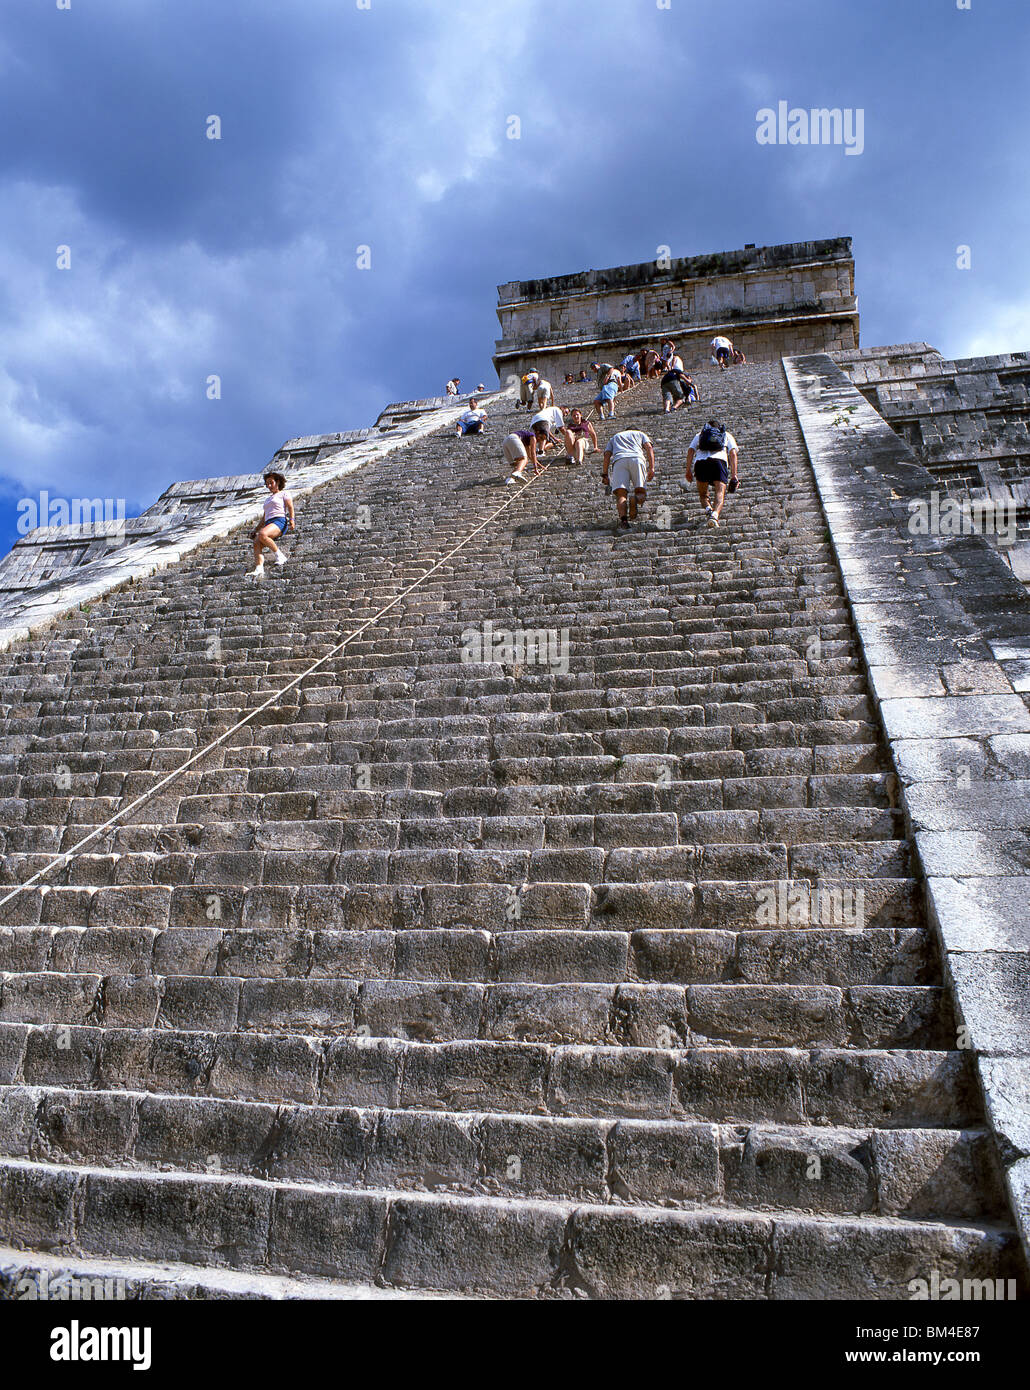 Temple of Kukulkan, Chichen Itza, Yucatan Peninsula, Yucatan State, Mexico Stock Photo